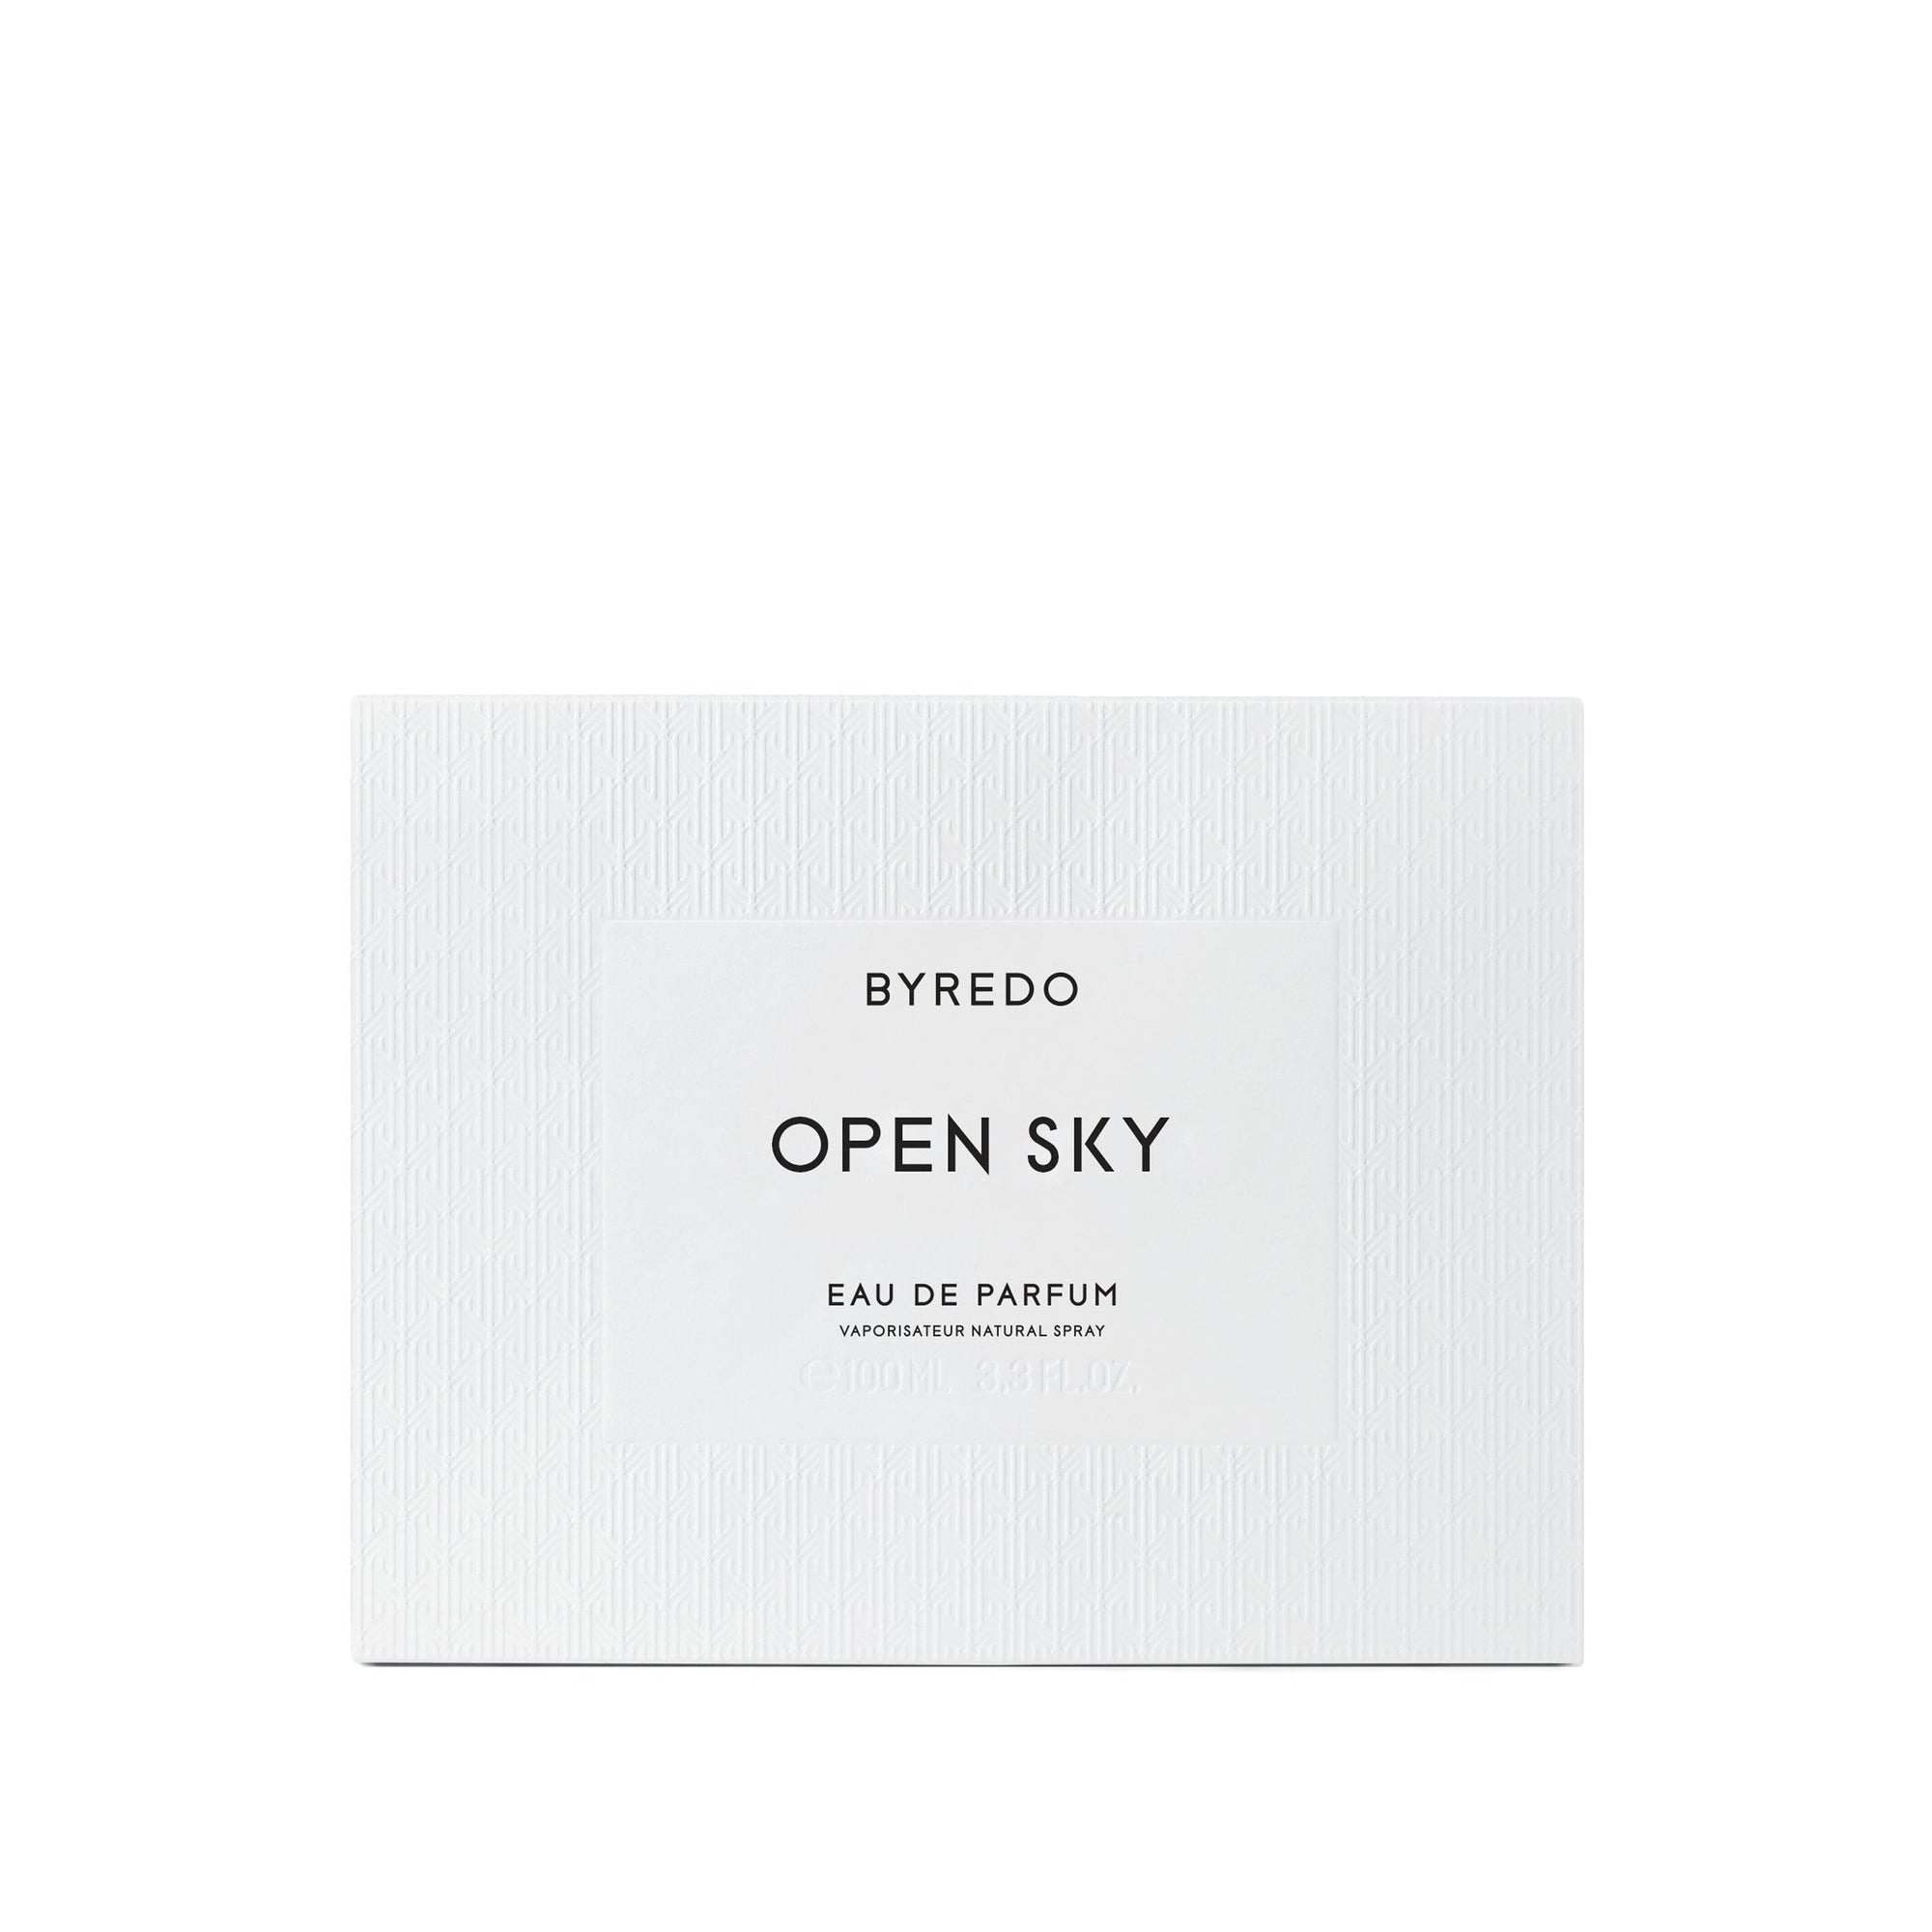 BYREDO - Eau de Parfum 100ML OPEN SKY - PERFUMES - (10000013) view 2